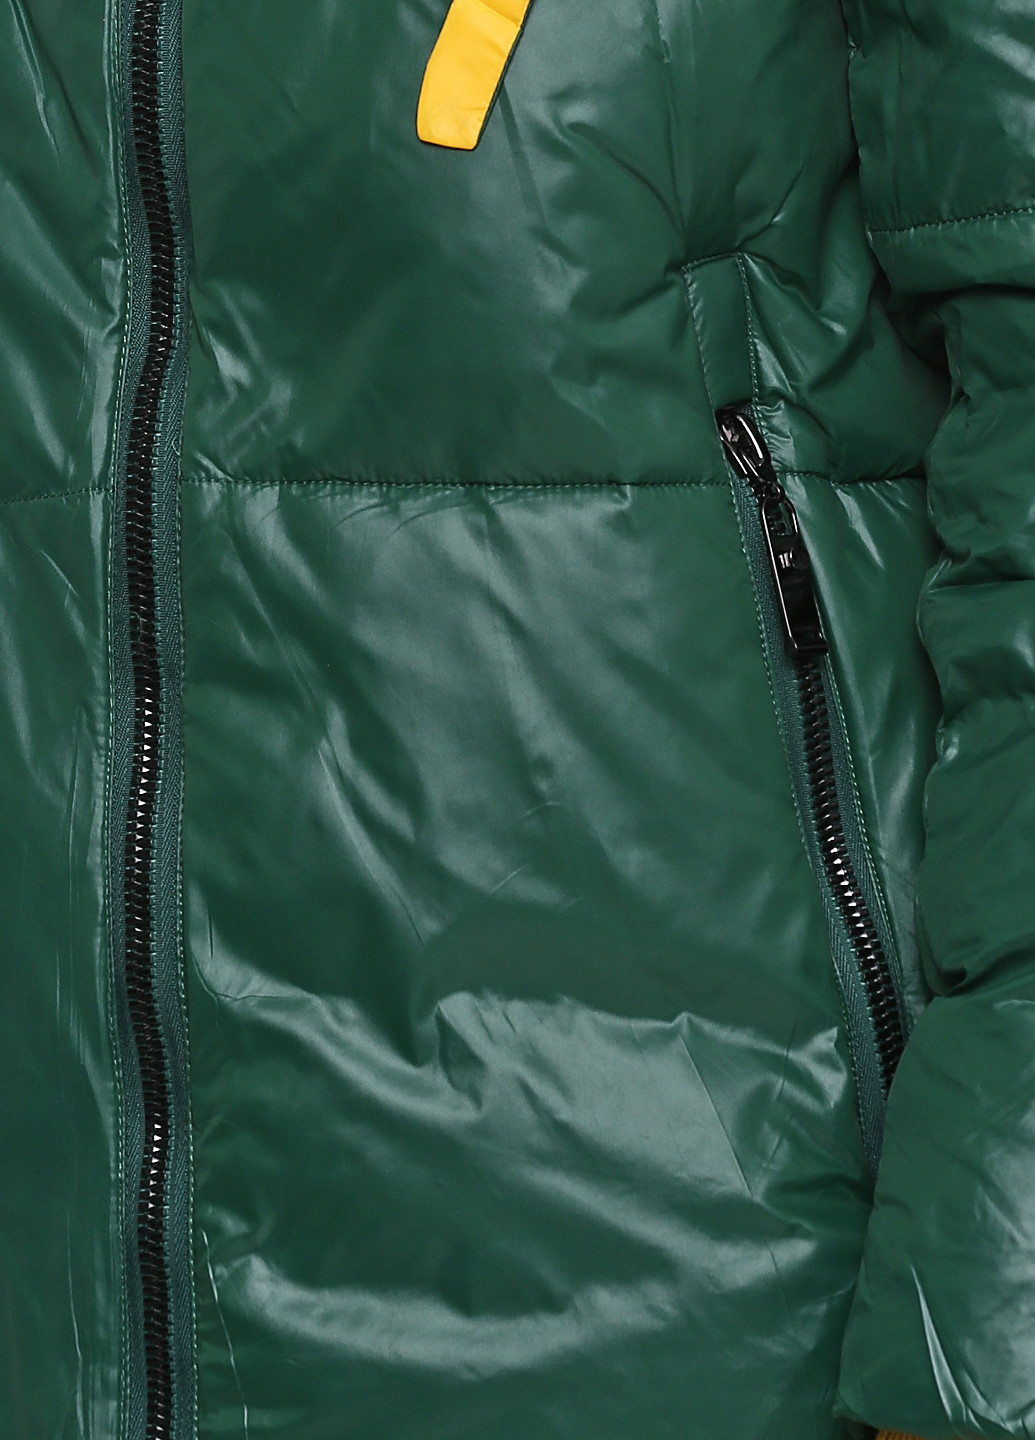 Зеленая зимняя куртка Lusskiri